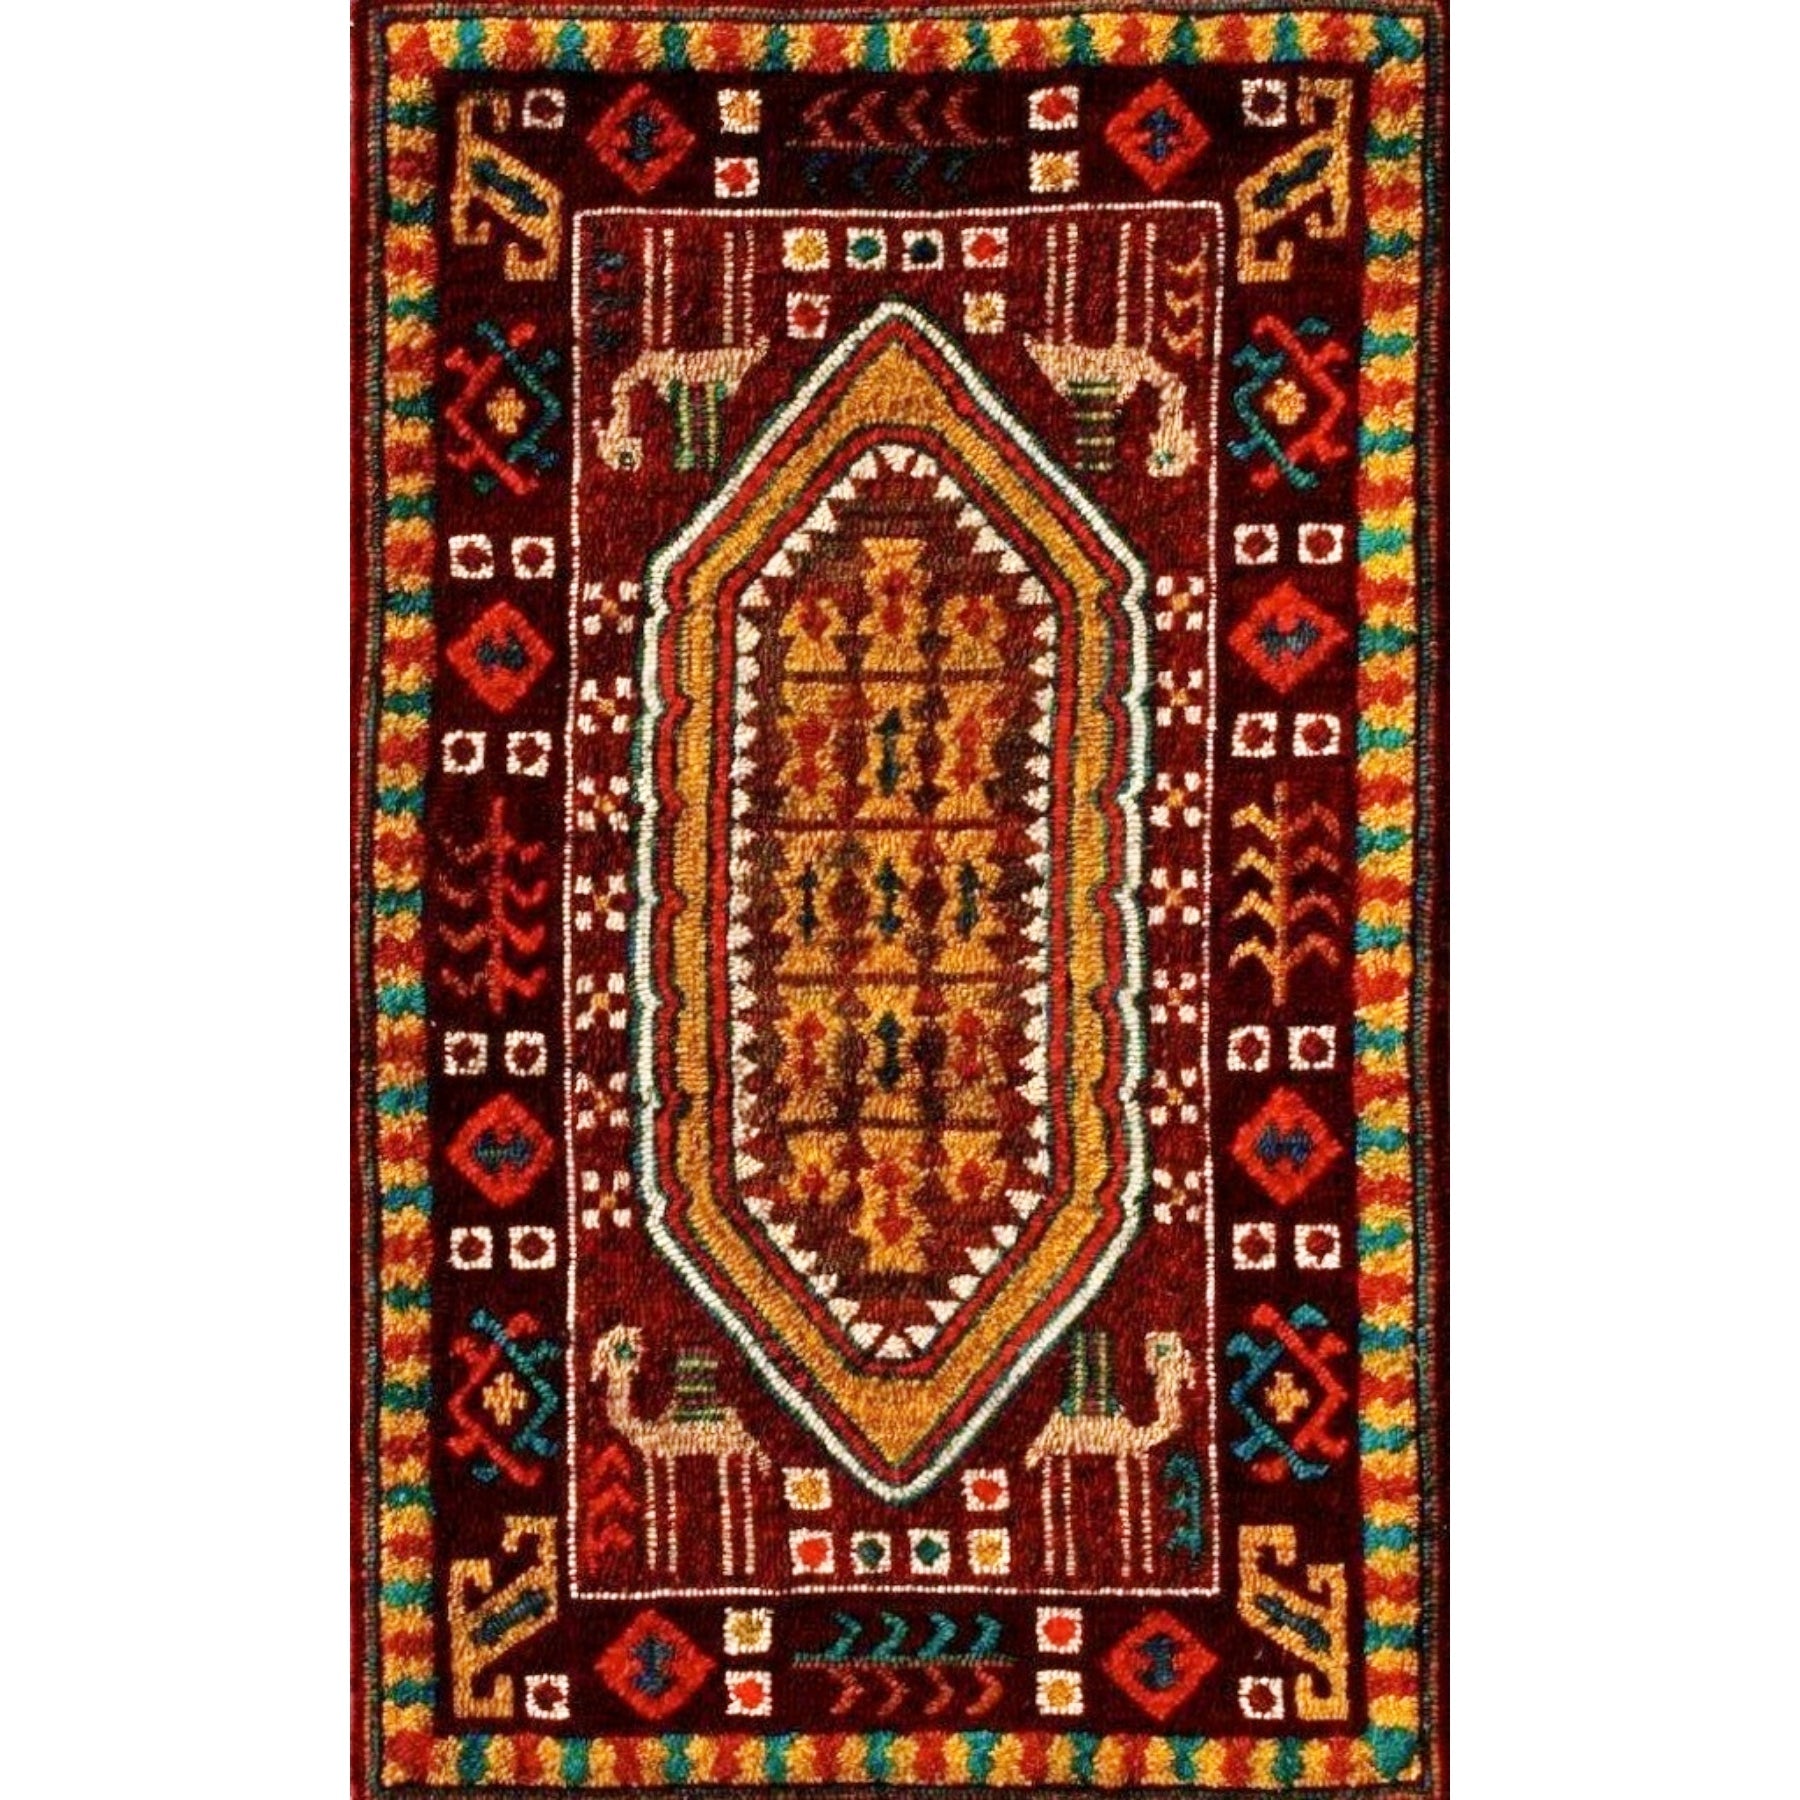 Chahar Mahal, rug hooked by Karen Guffey